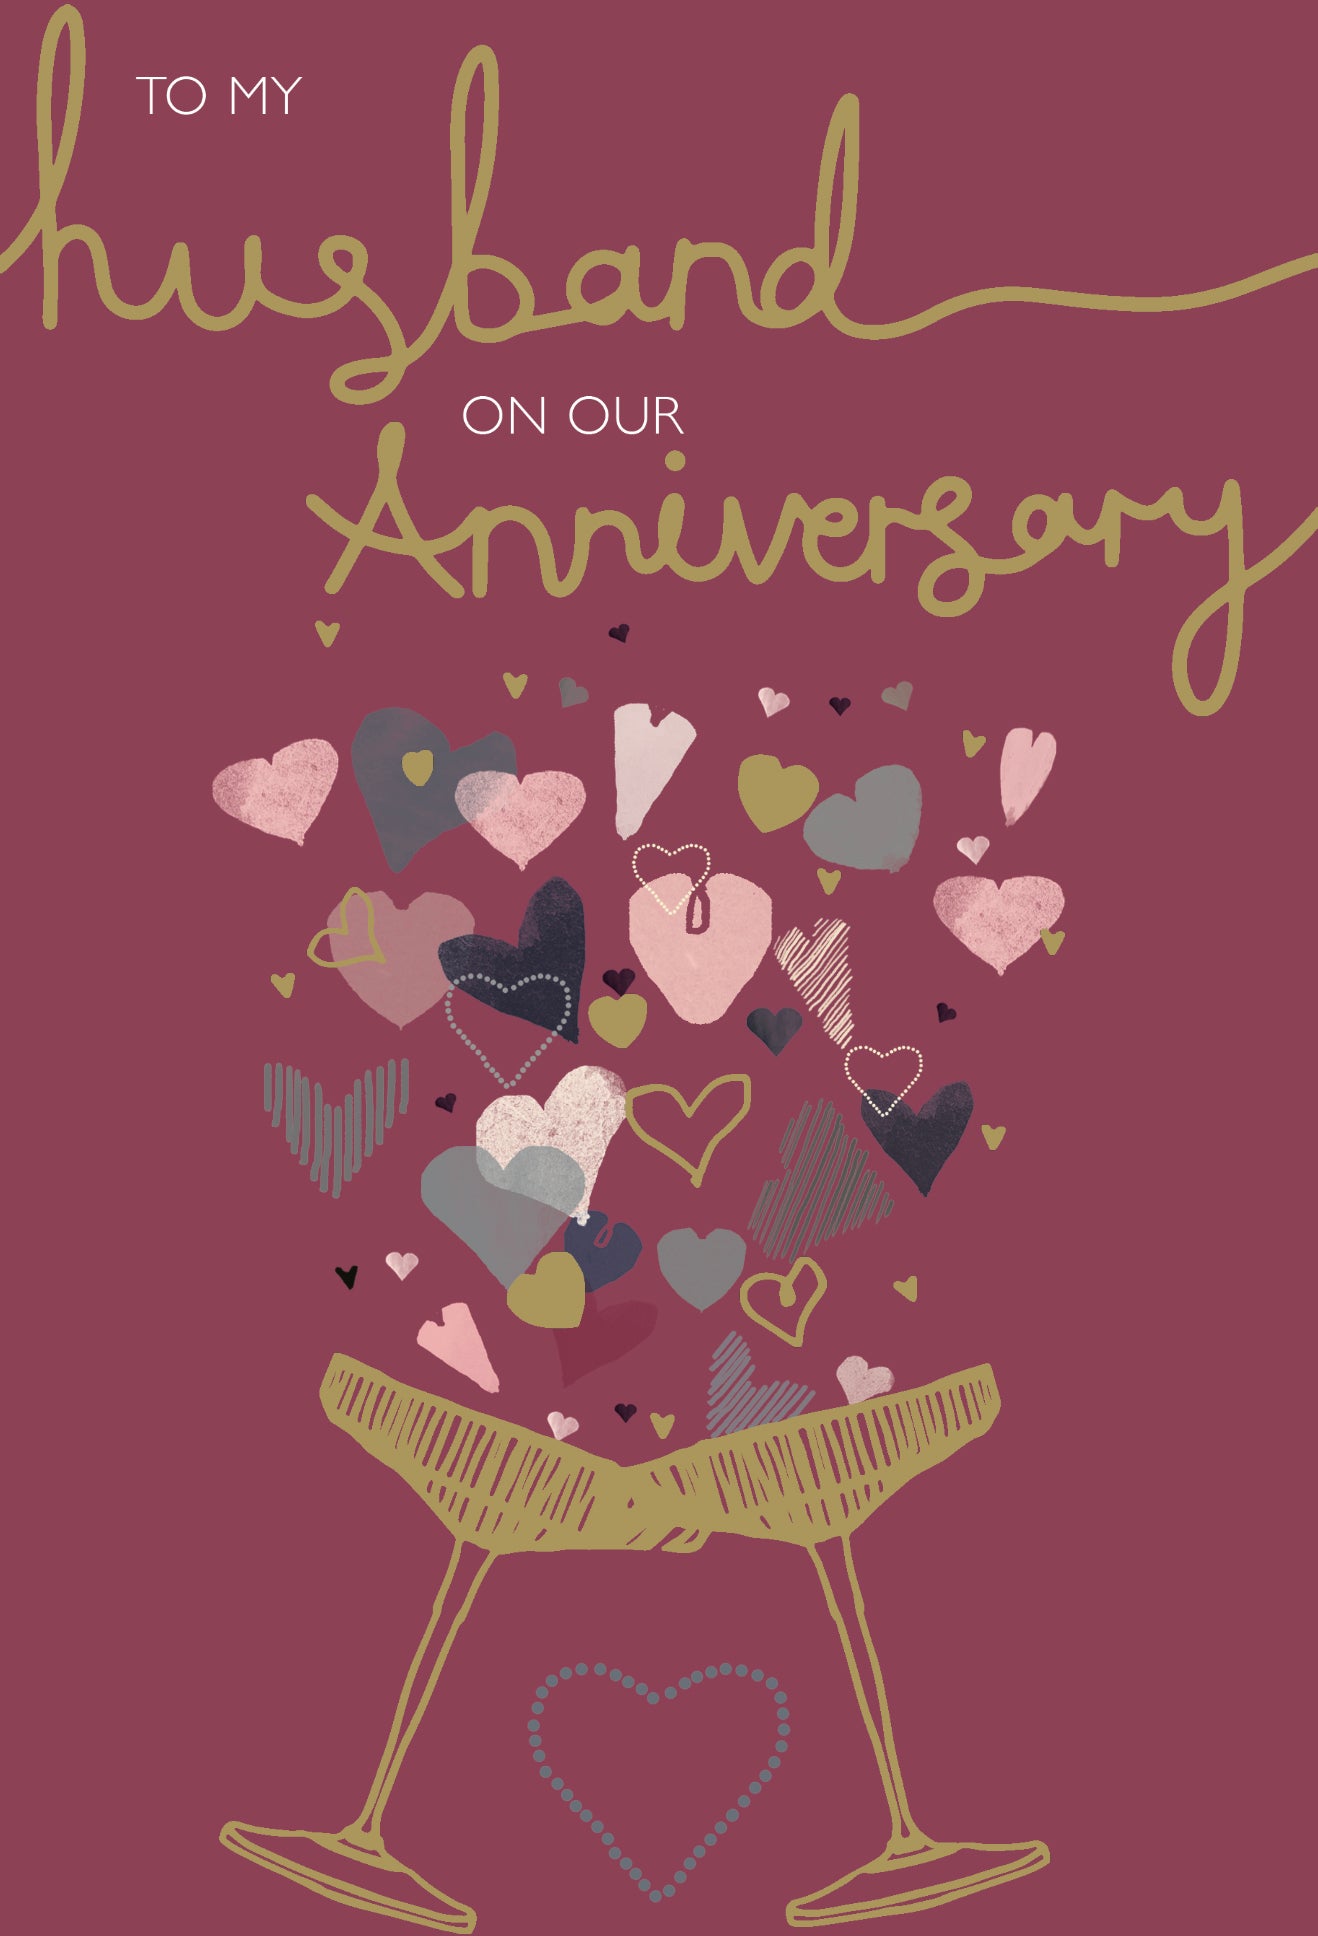 Husband anniversary card - hearts and champagne glasses